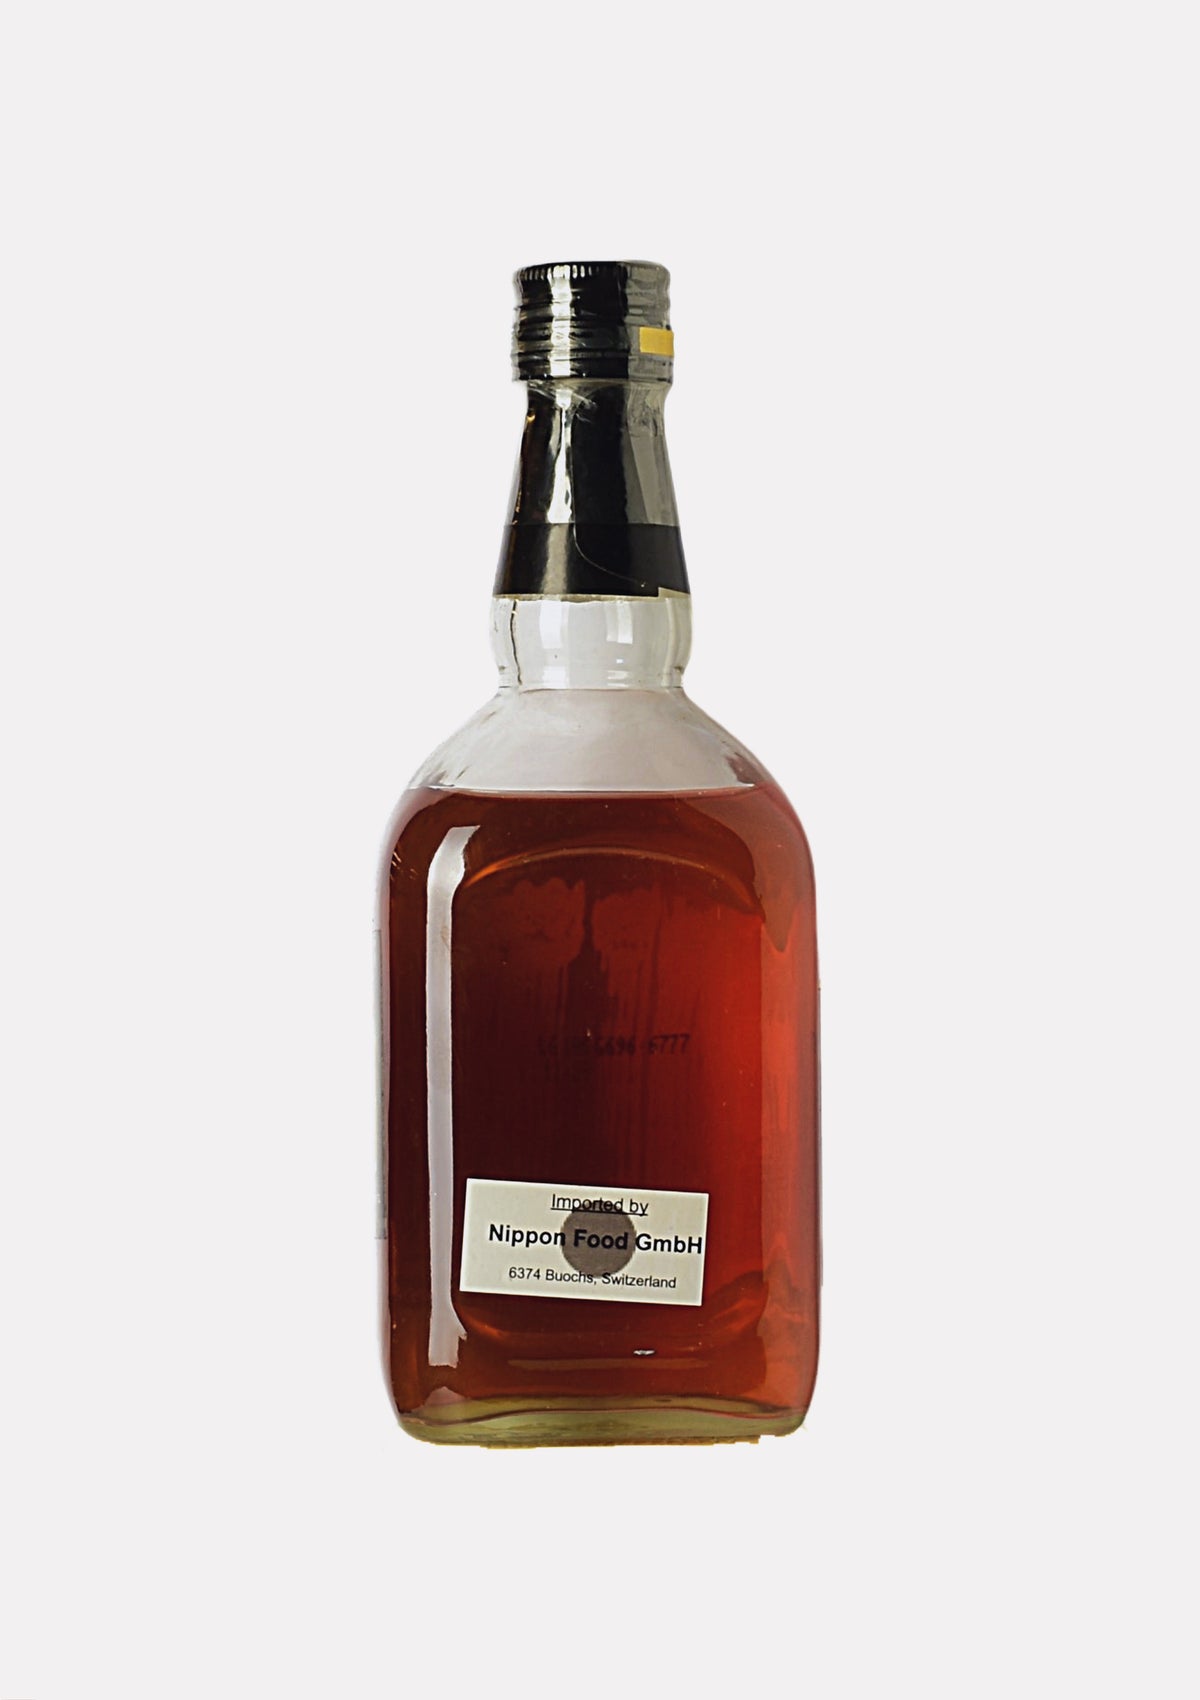 Smokey Jim`s Old Kentucky Bourbon Whiskey